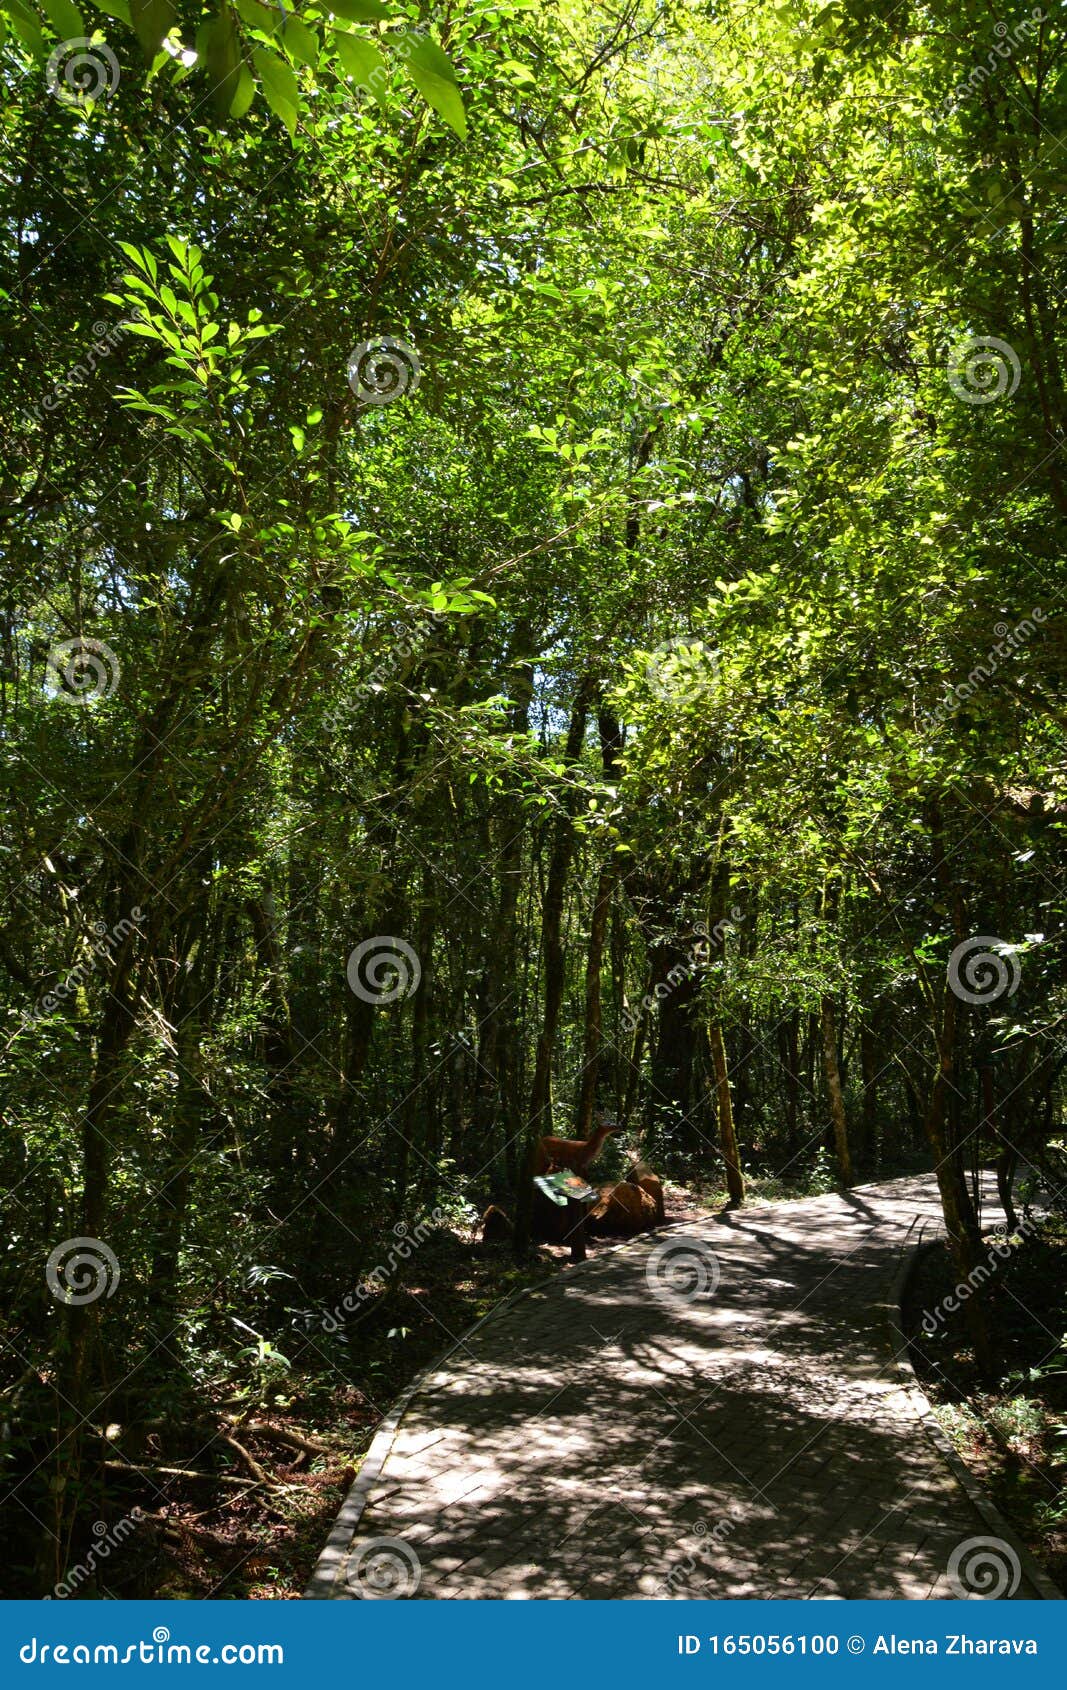 brazilian forest in the sun, serra park,  canela, brazil